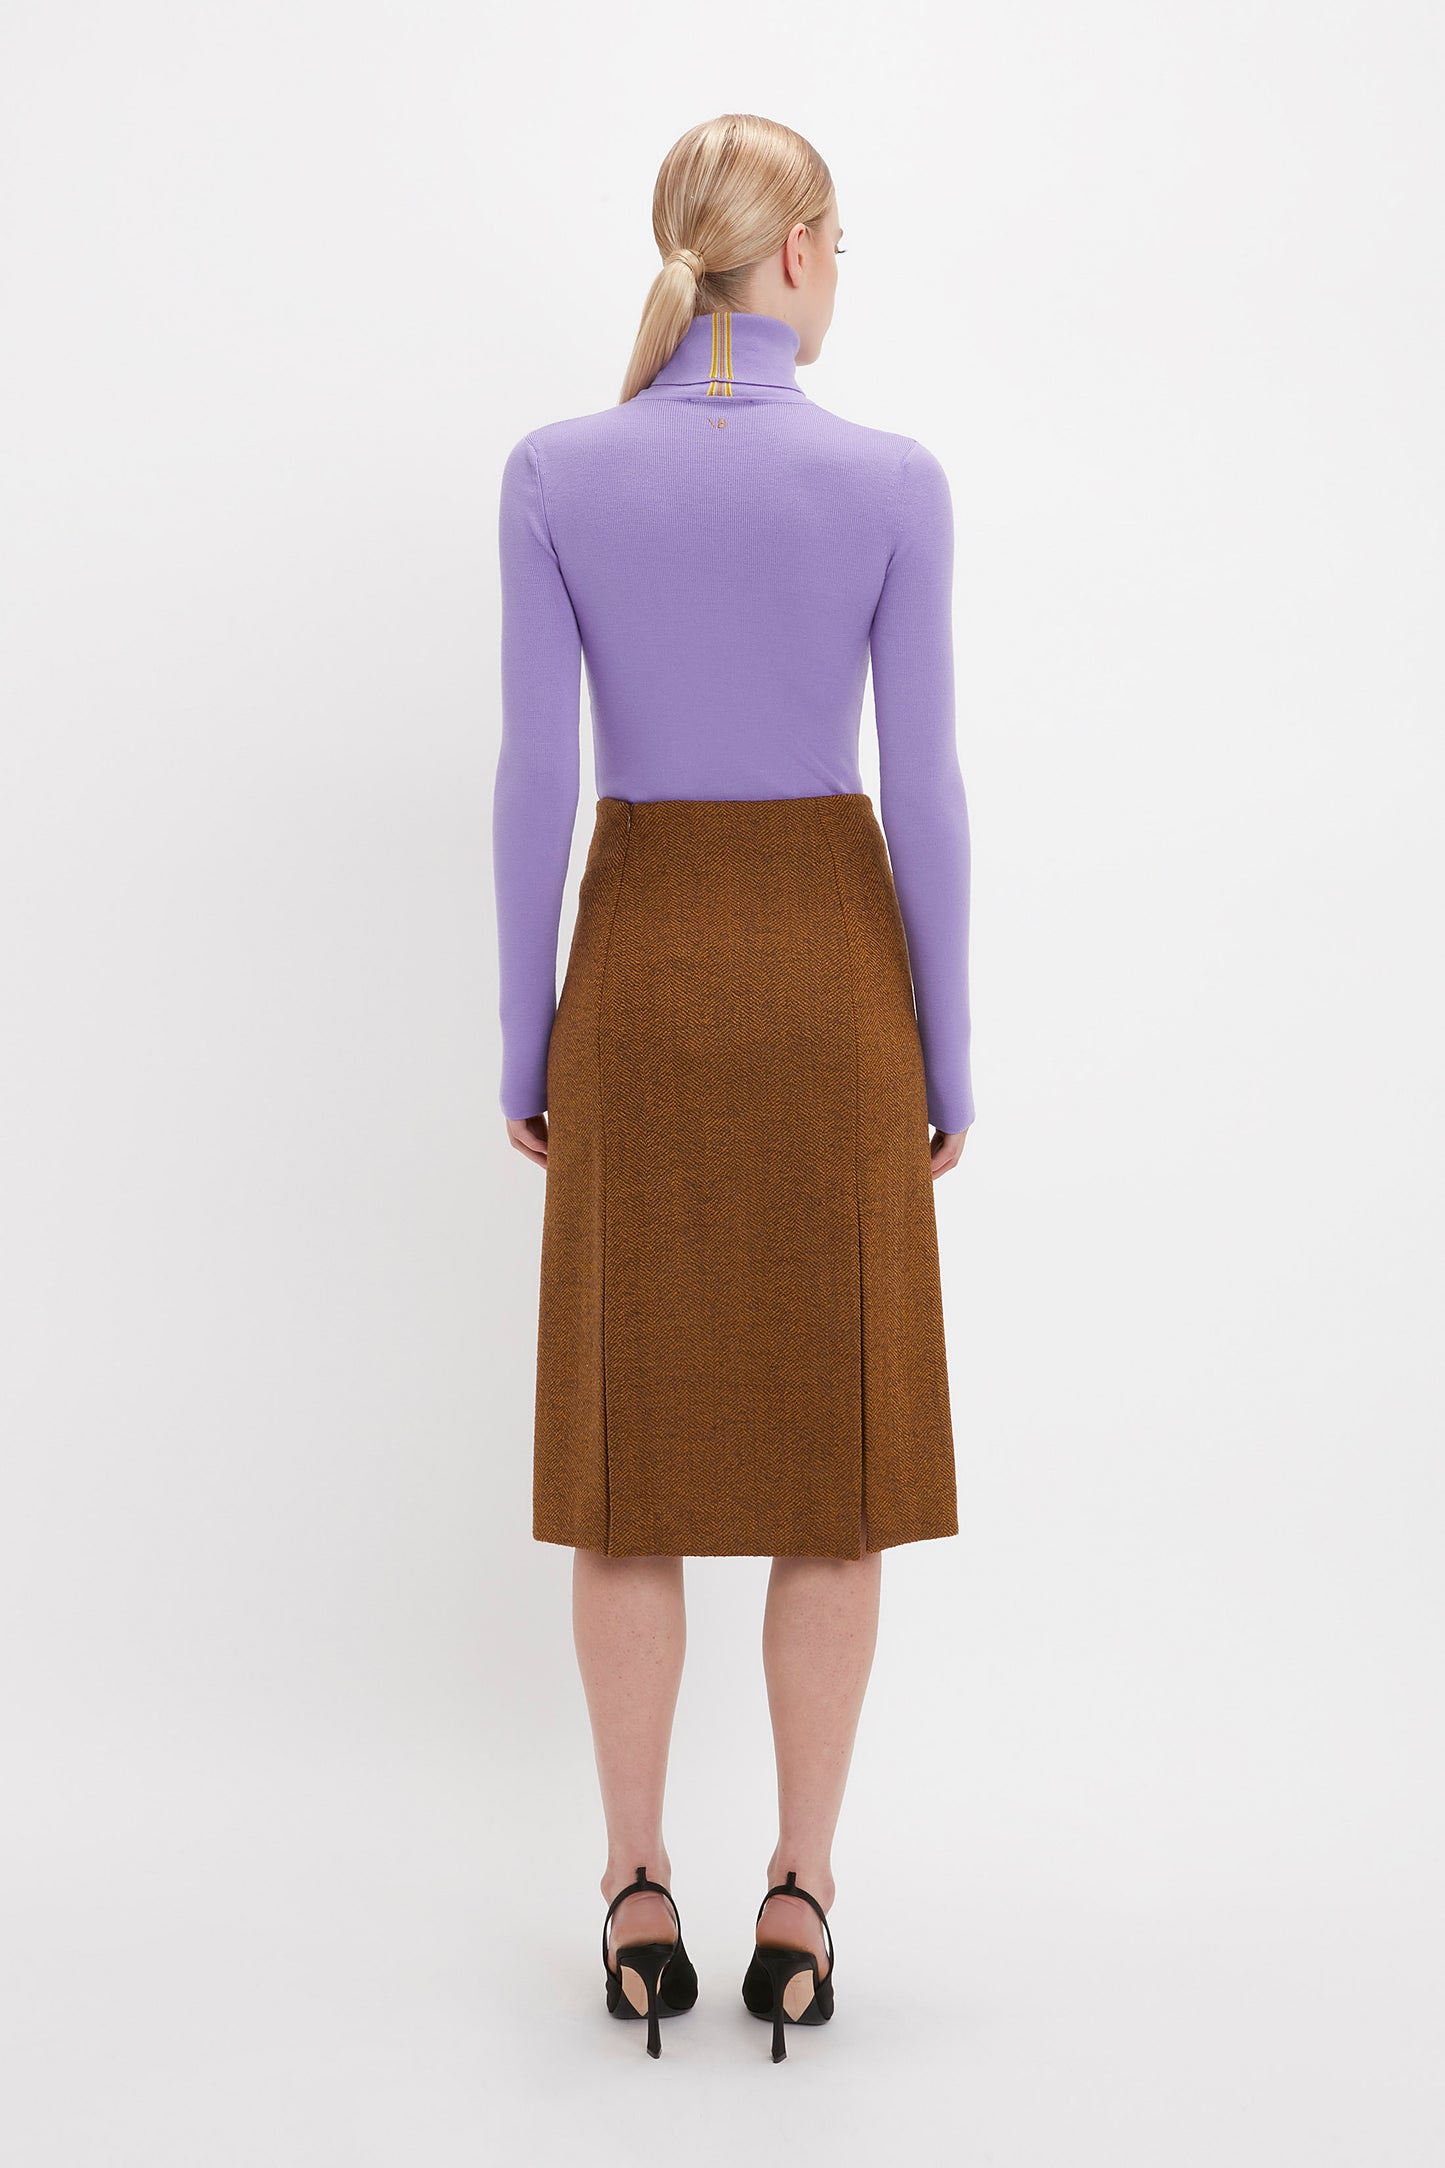 Double Layer Split Skirt In Caramel